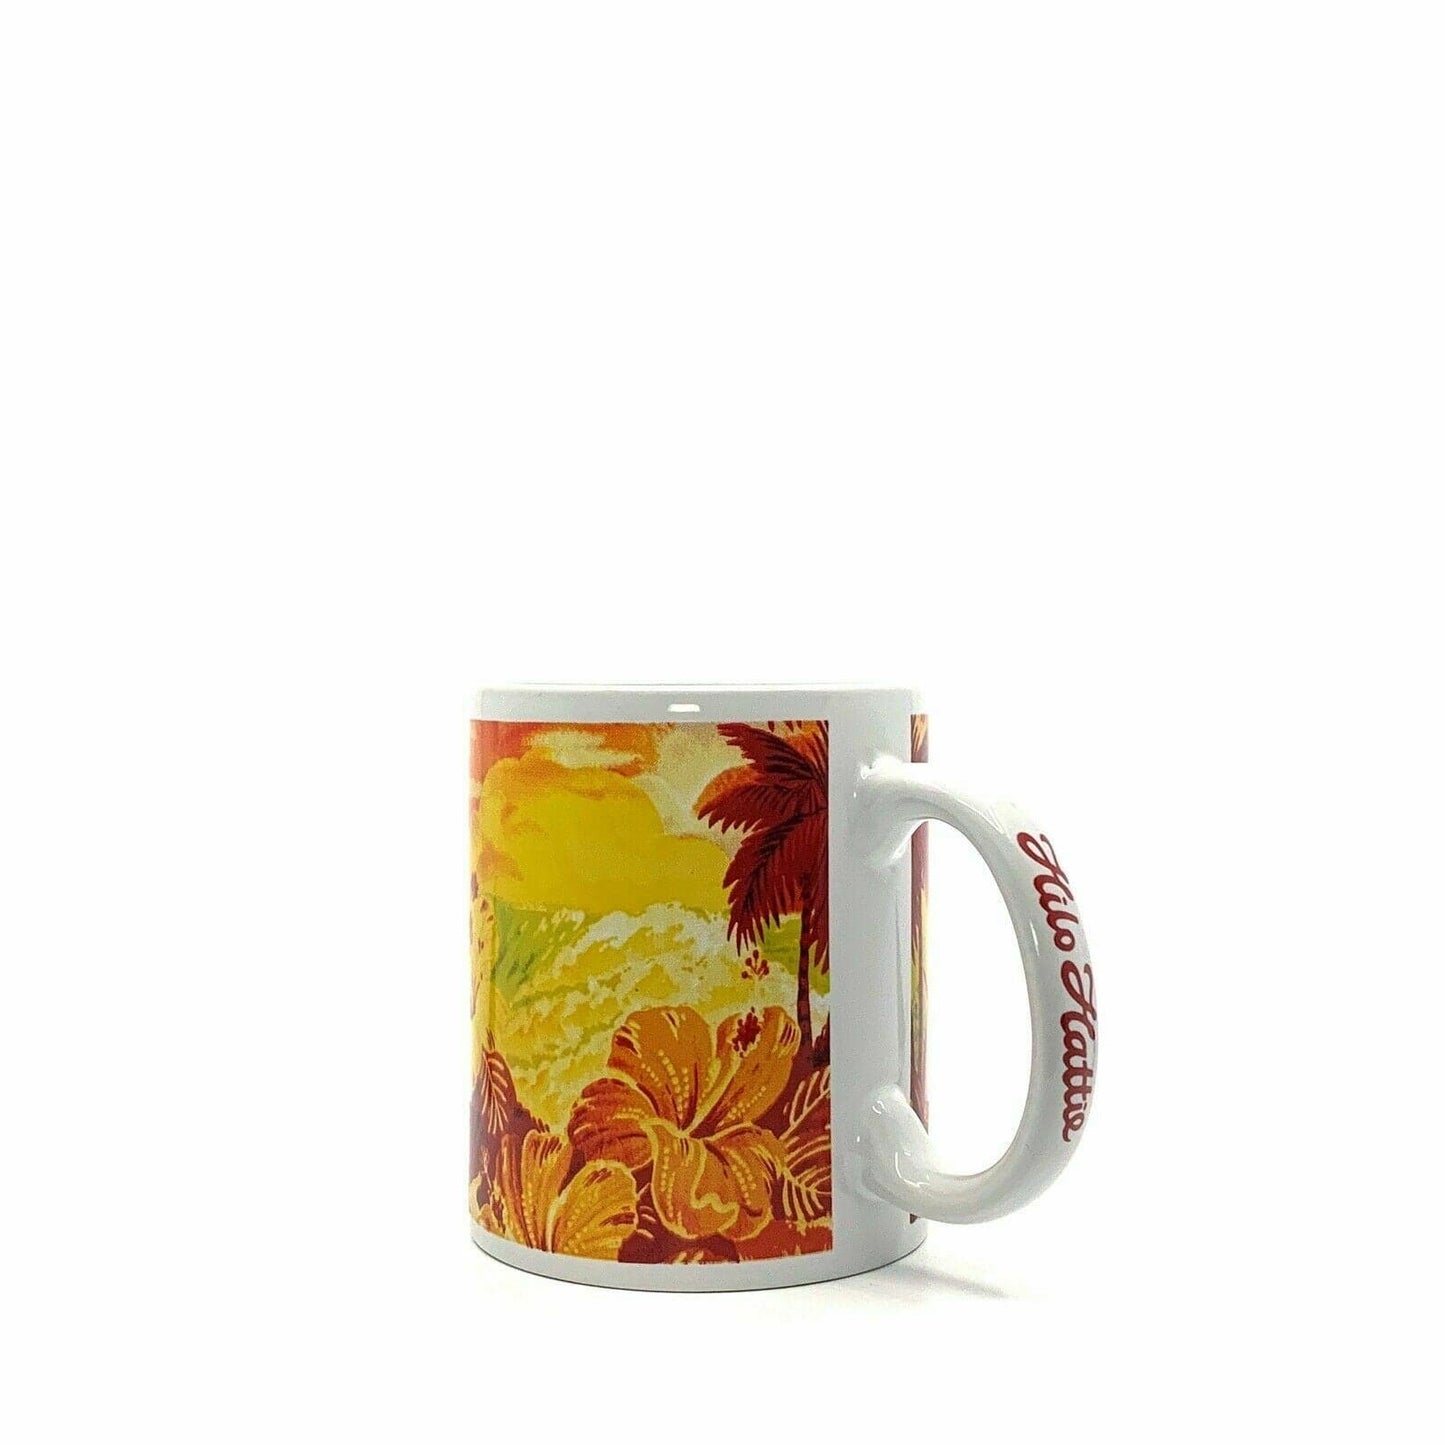 Exquisite Hilo Hattie Coffee Tea Mug Cup Island Heritage 2014 - 10oz